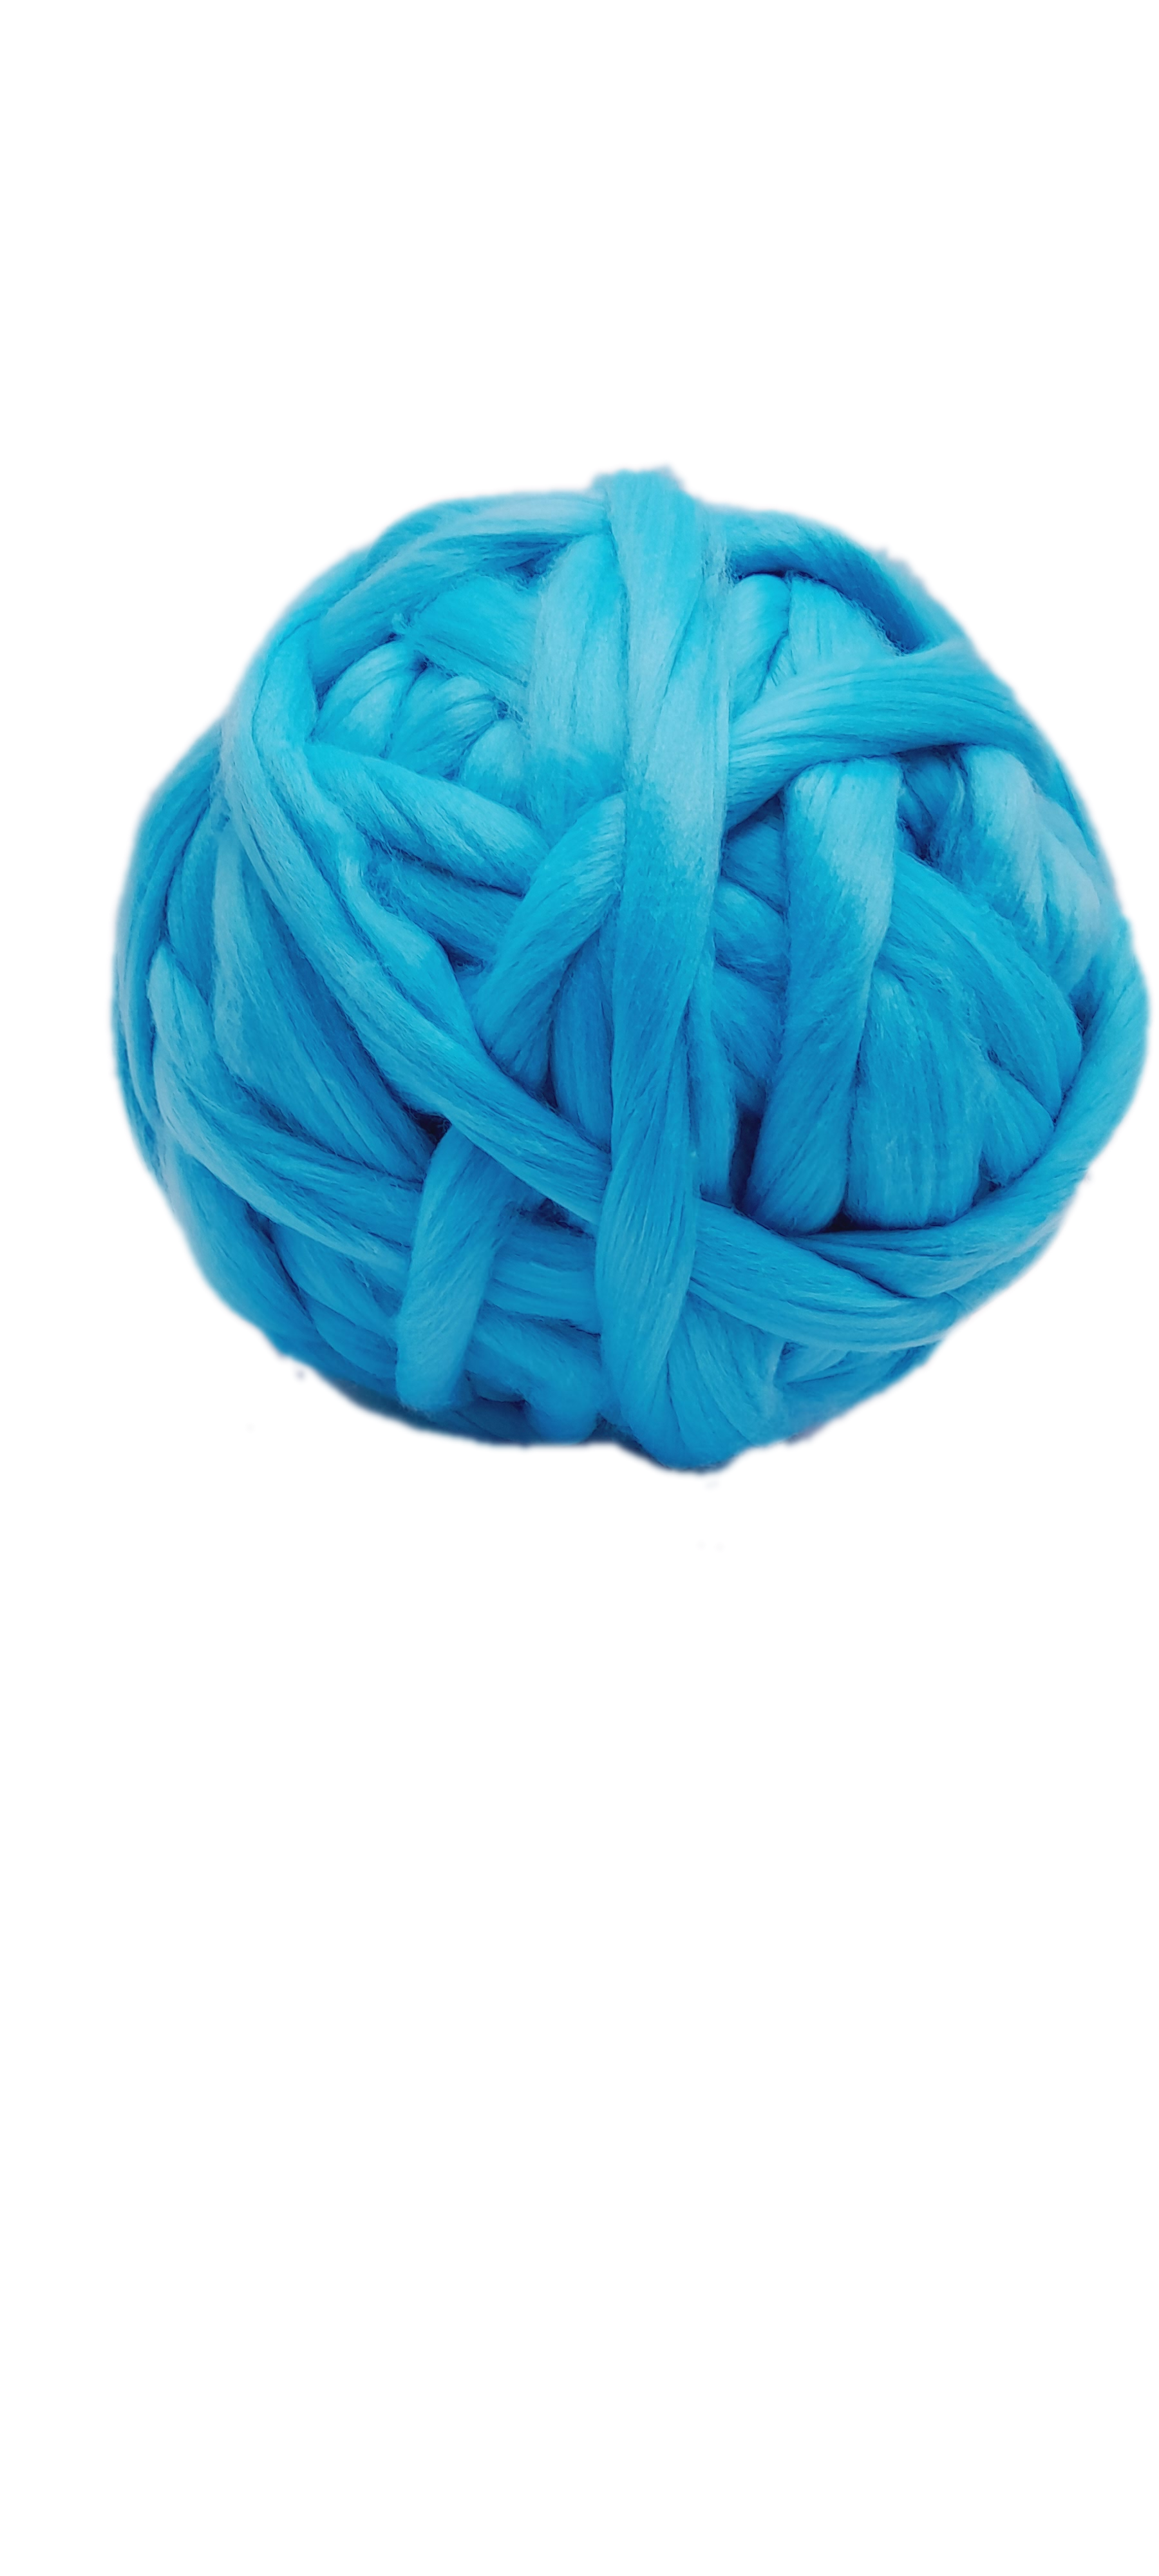 Jumbo Yarn for Arm Knitting, Big Dreams Soft & Squishy Acrylic Yarn